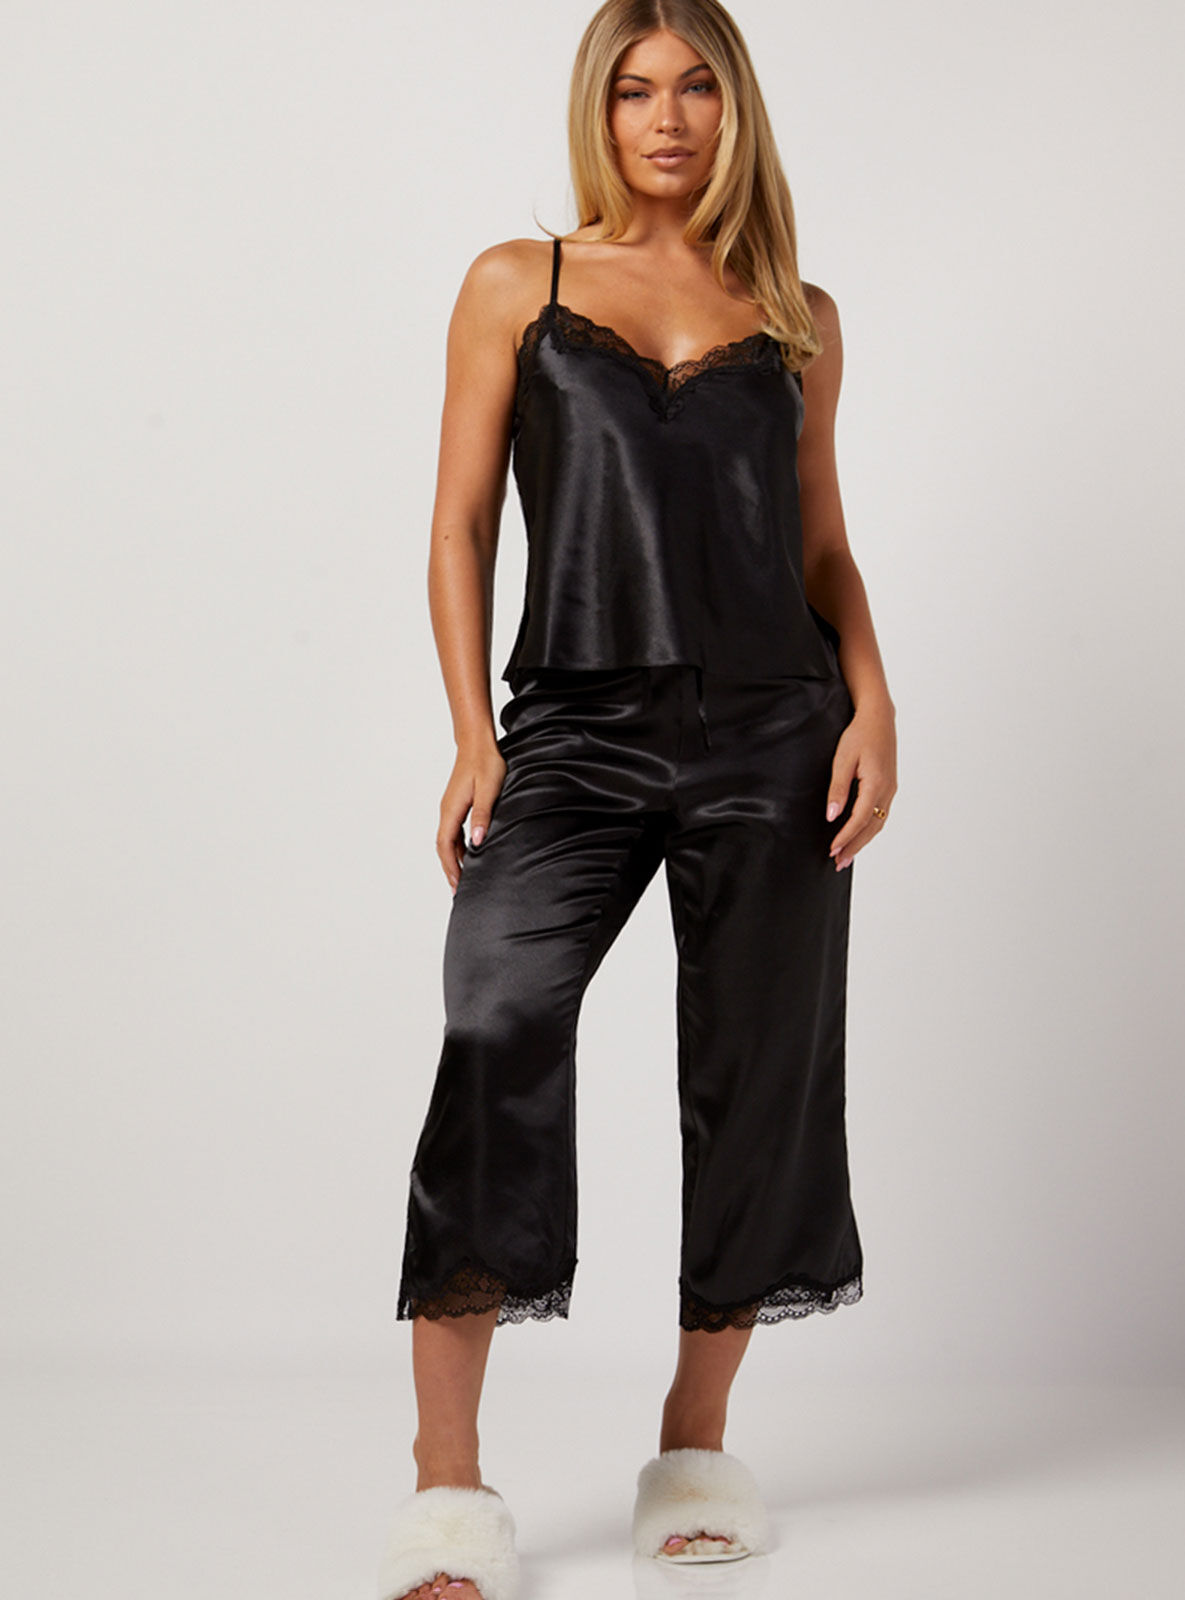 Boux Avenue Maisie satin cami and cropped pant set - Black - 08